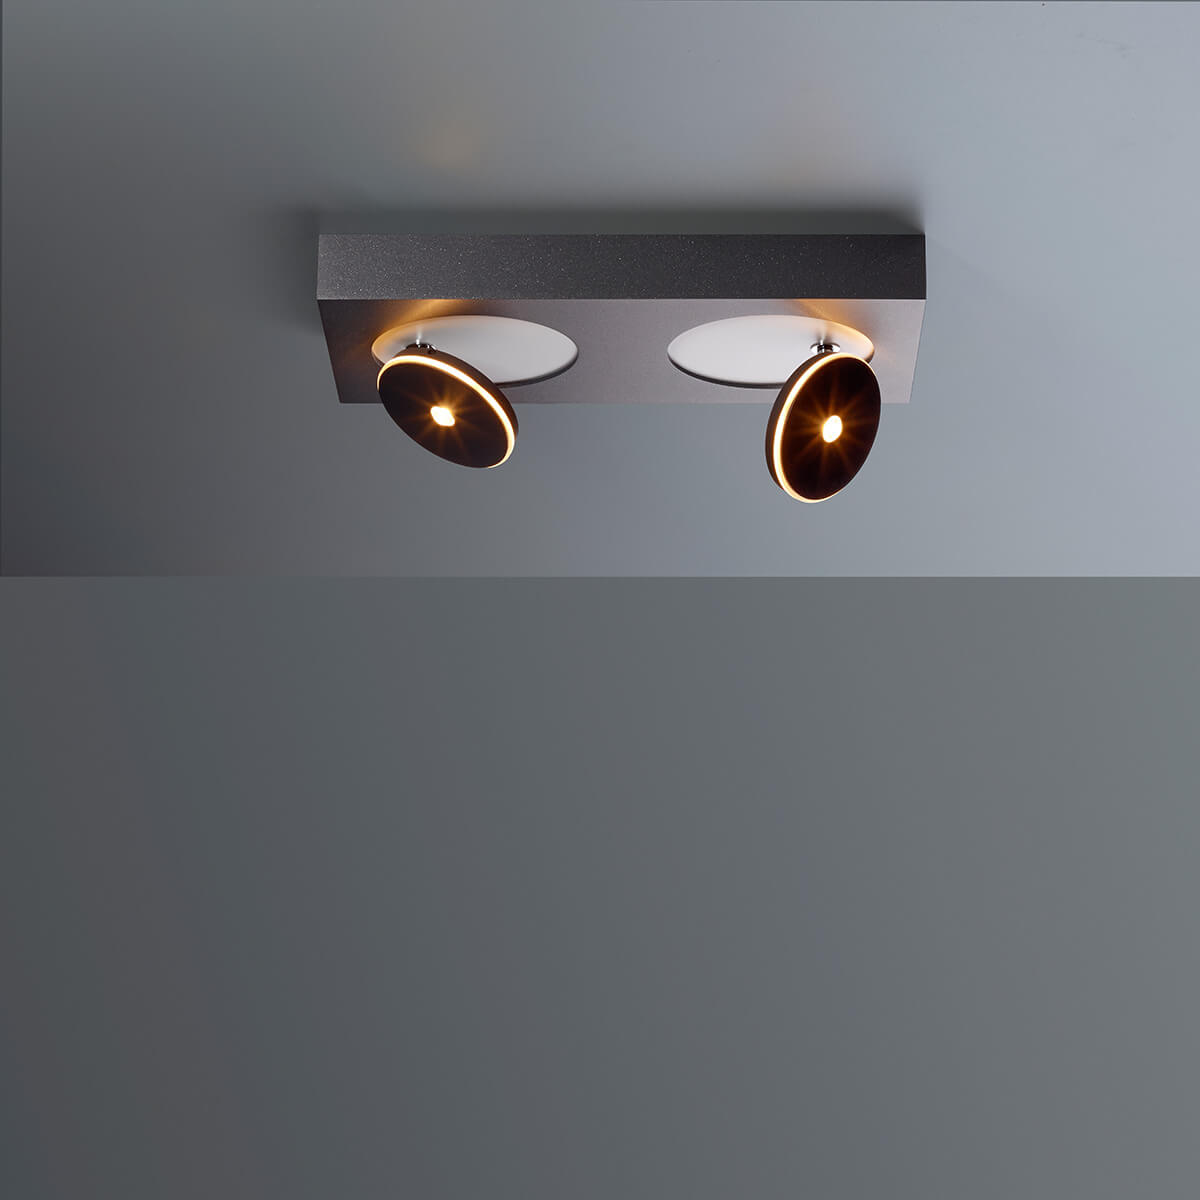 Escale Spot rechteckig, mit It Casambi-Modul LED Deckenleuchte